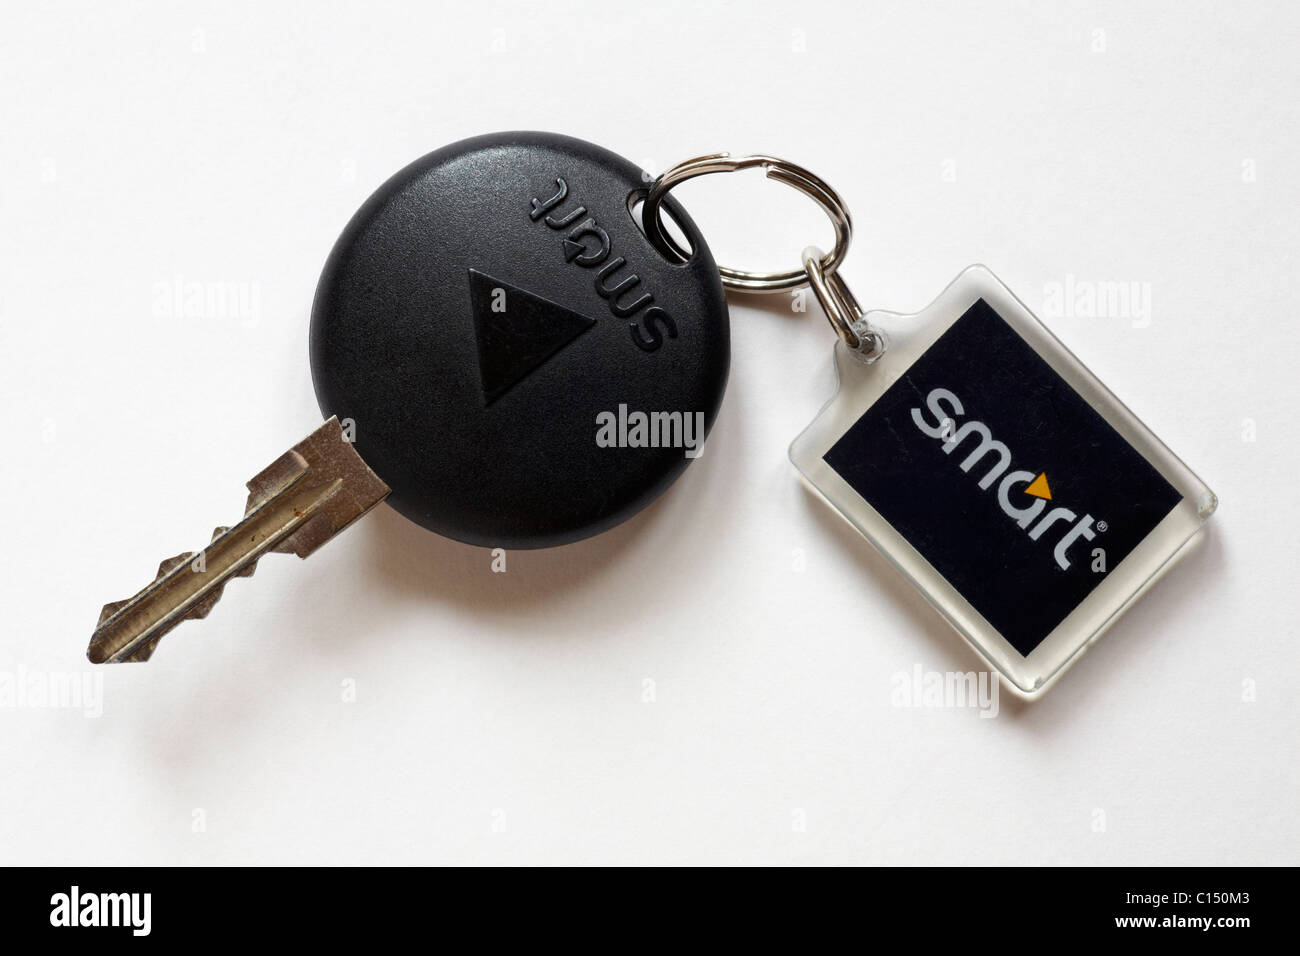 Smart car car key with Smart key ring isolated on white background Stock Photo